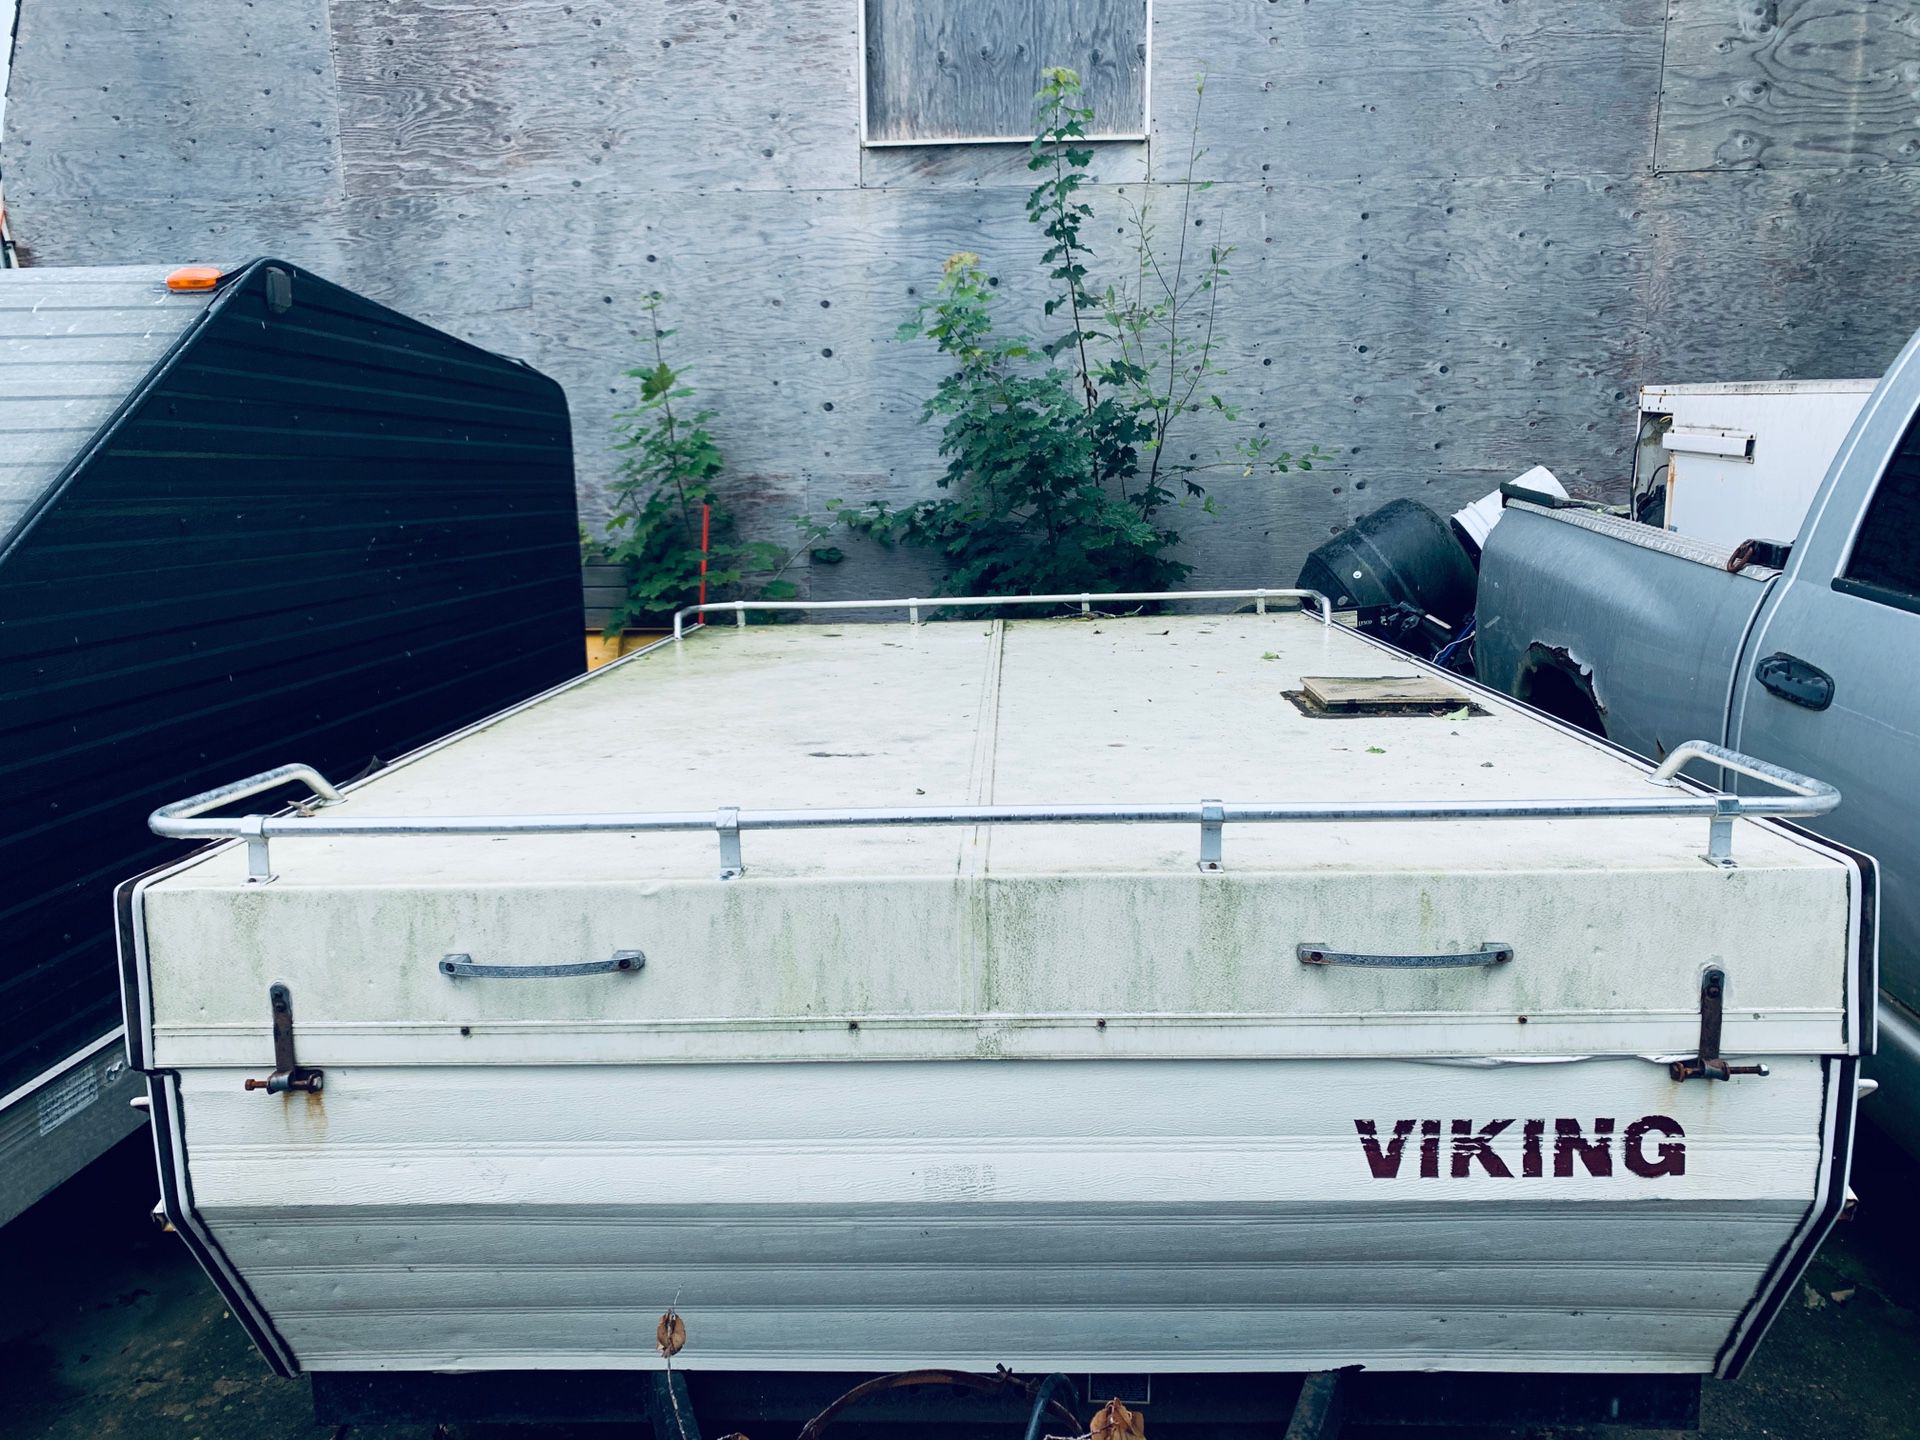 1984 Viking Popup Camper plus items inside